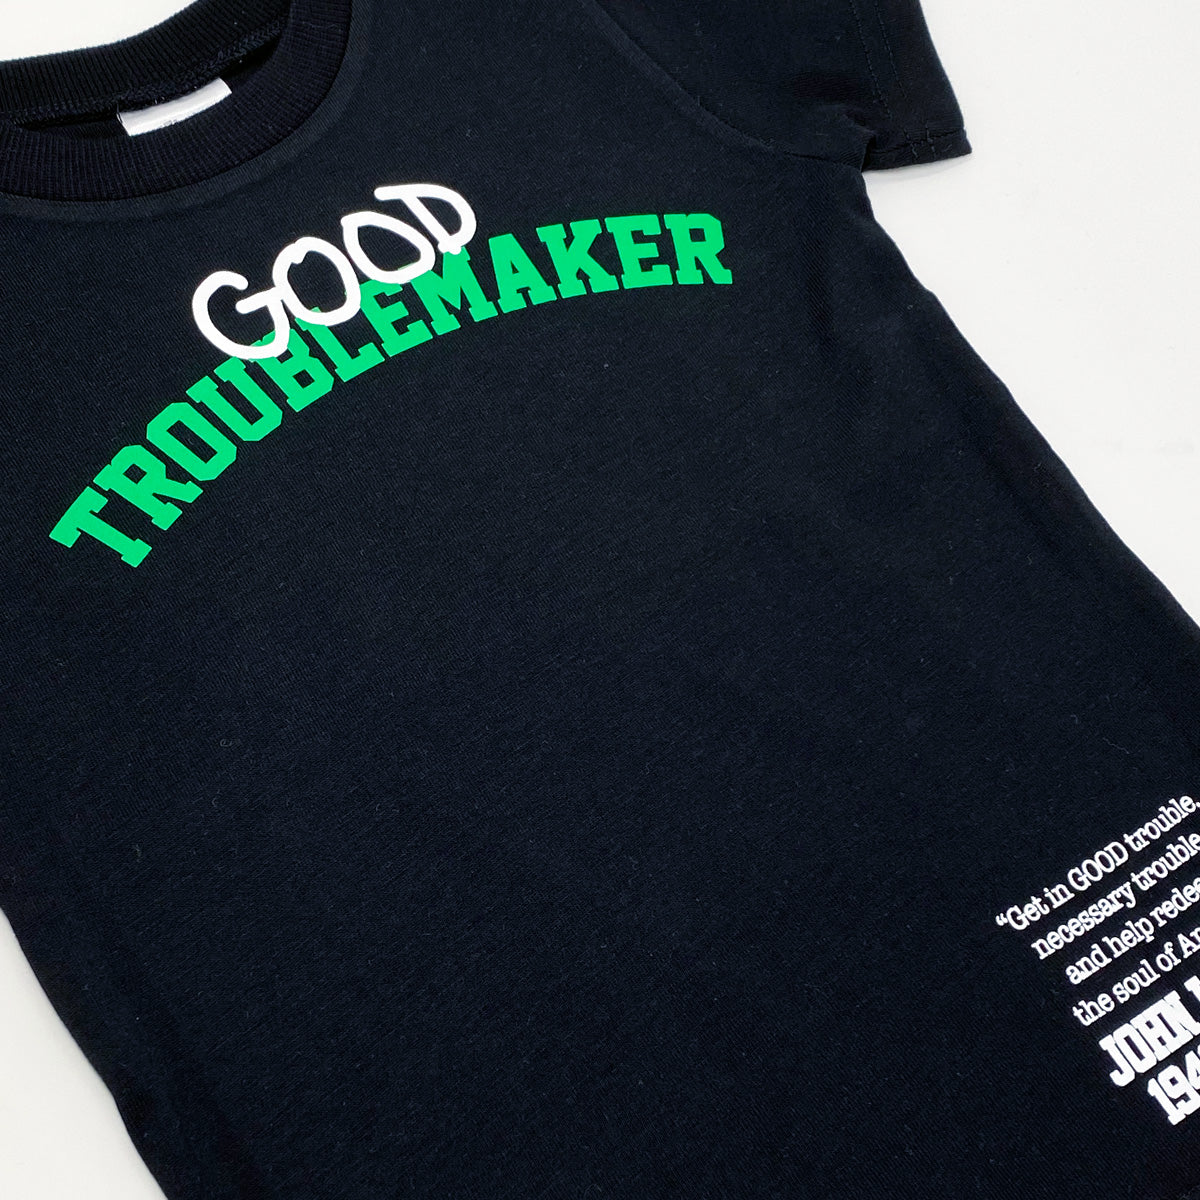 GOOD Troublemaker T-shirt (Black)